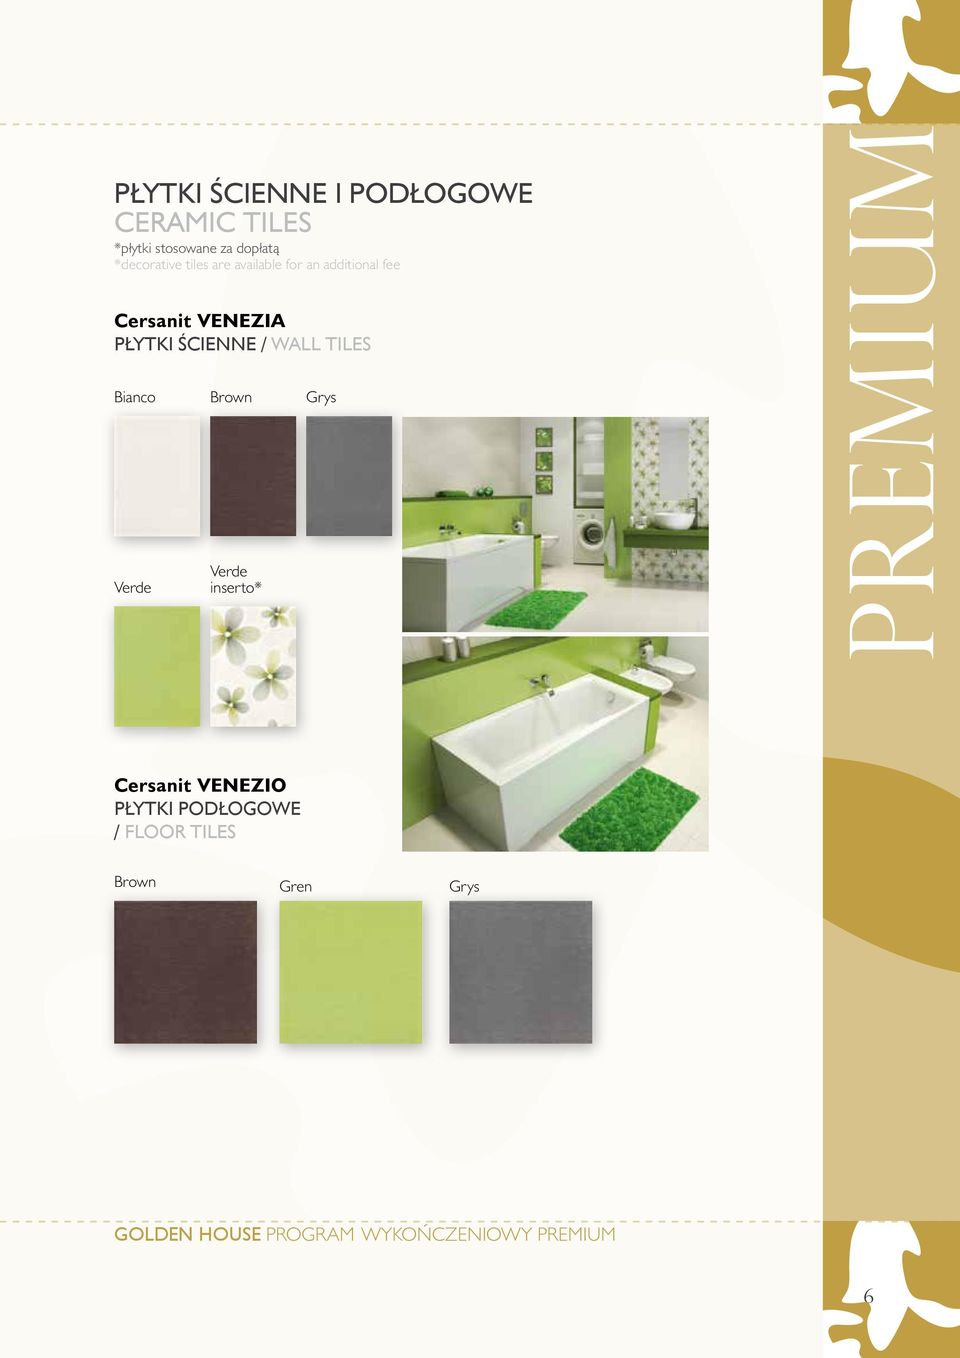 ścienne / wall tiles Bianco Brown Grys Verde Verde inserto* PREMIUM Cersanit